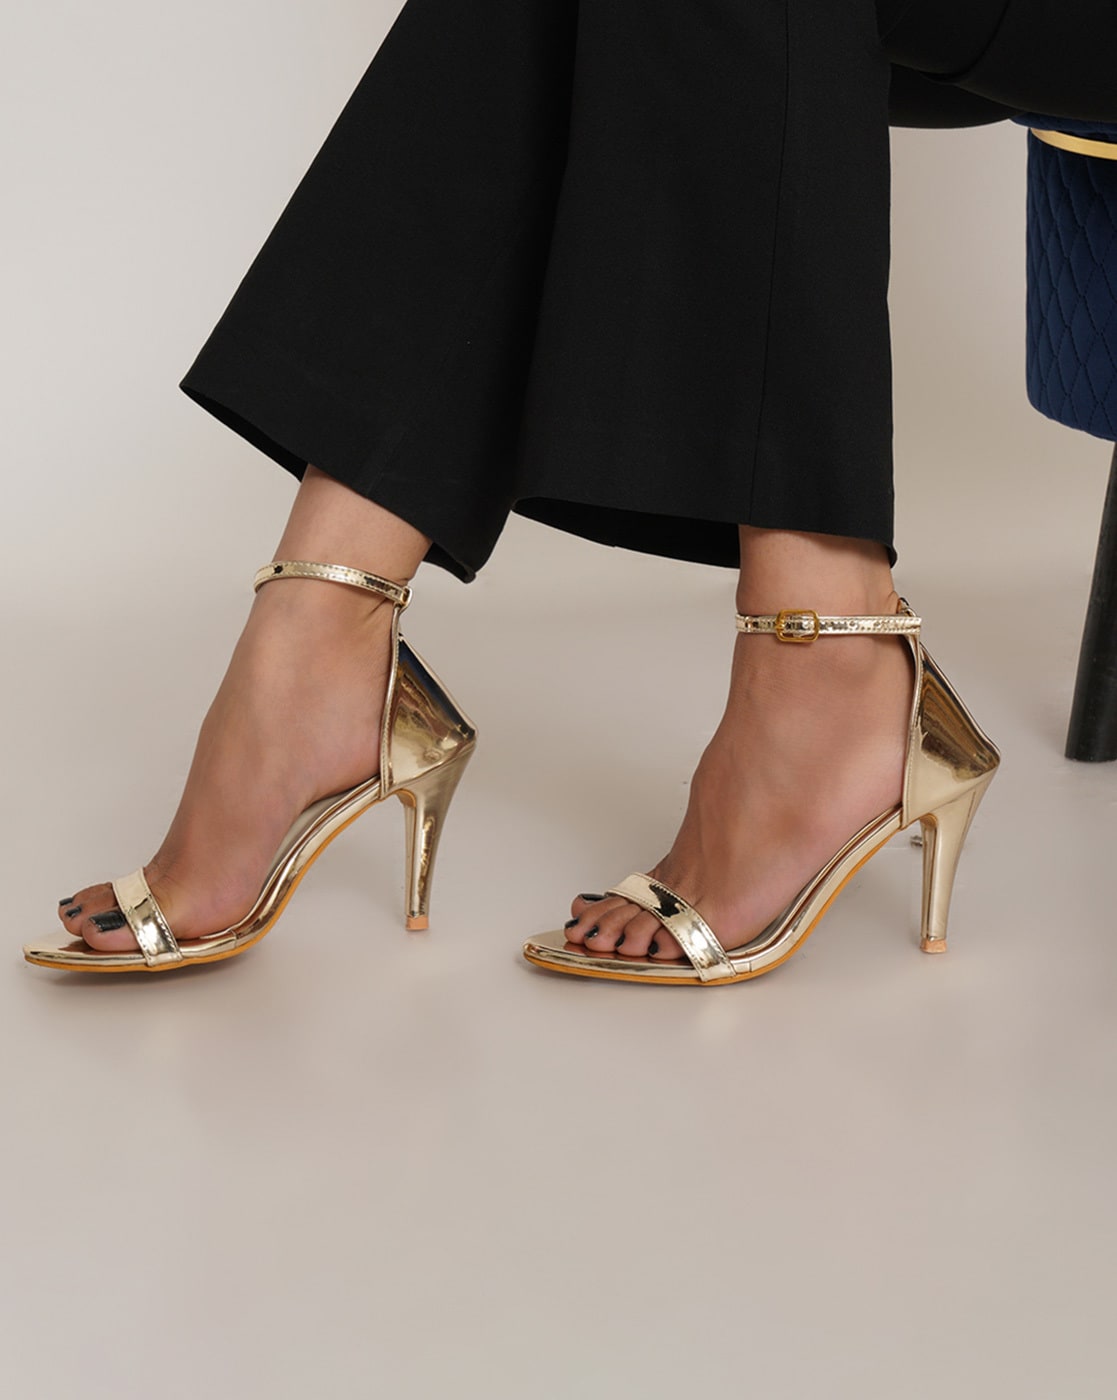 STYLZREPUBLIC Women's Ankle Strap High Heel (Gold) : Amazon.in: Fashion